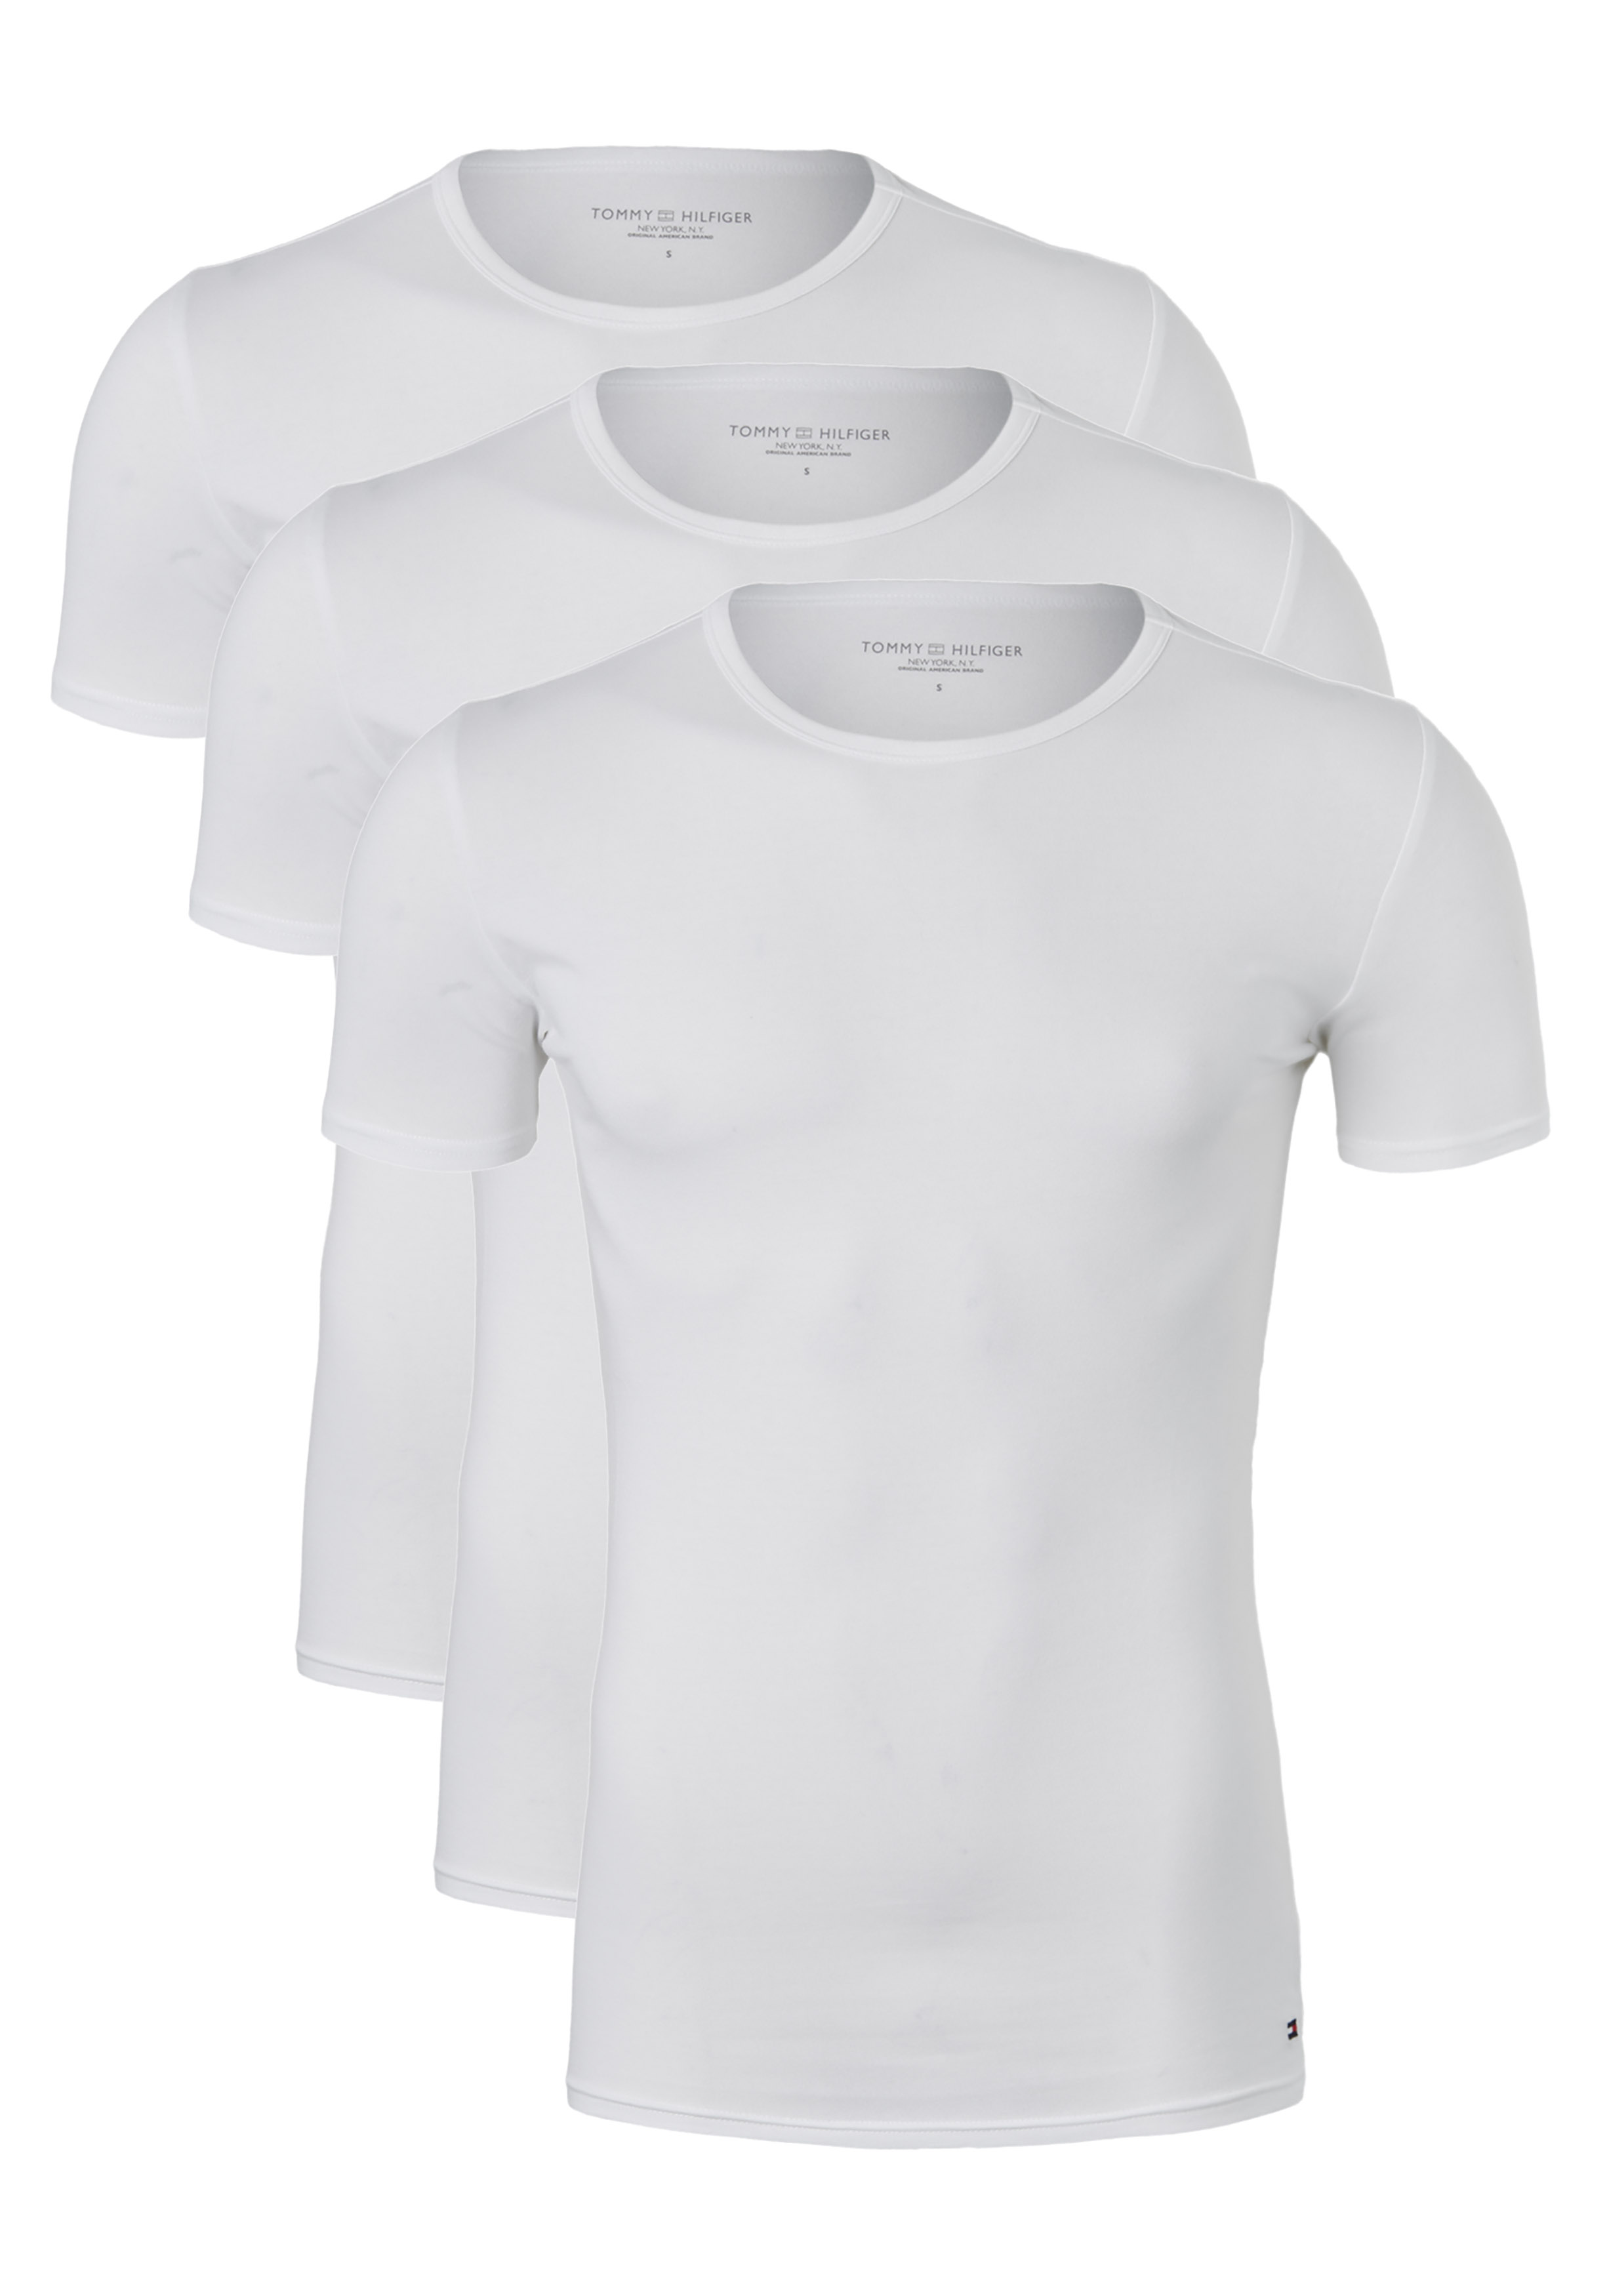 software Regenboog Voorstellen Tommy Hilfiger Cotton stretch T-shirts (3-pack), heren T-shirts O-hals, wit  - Zomer SALE tot 50% korting